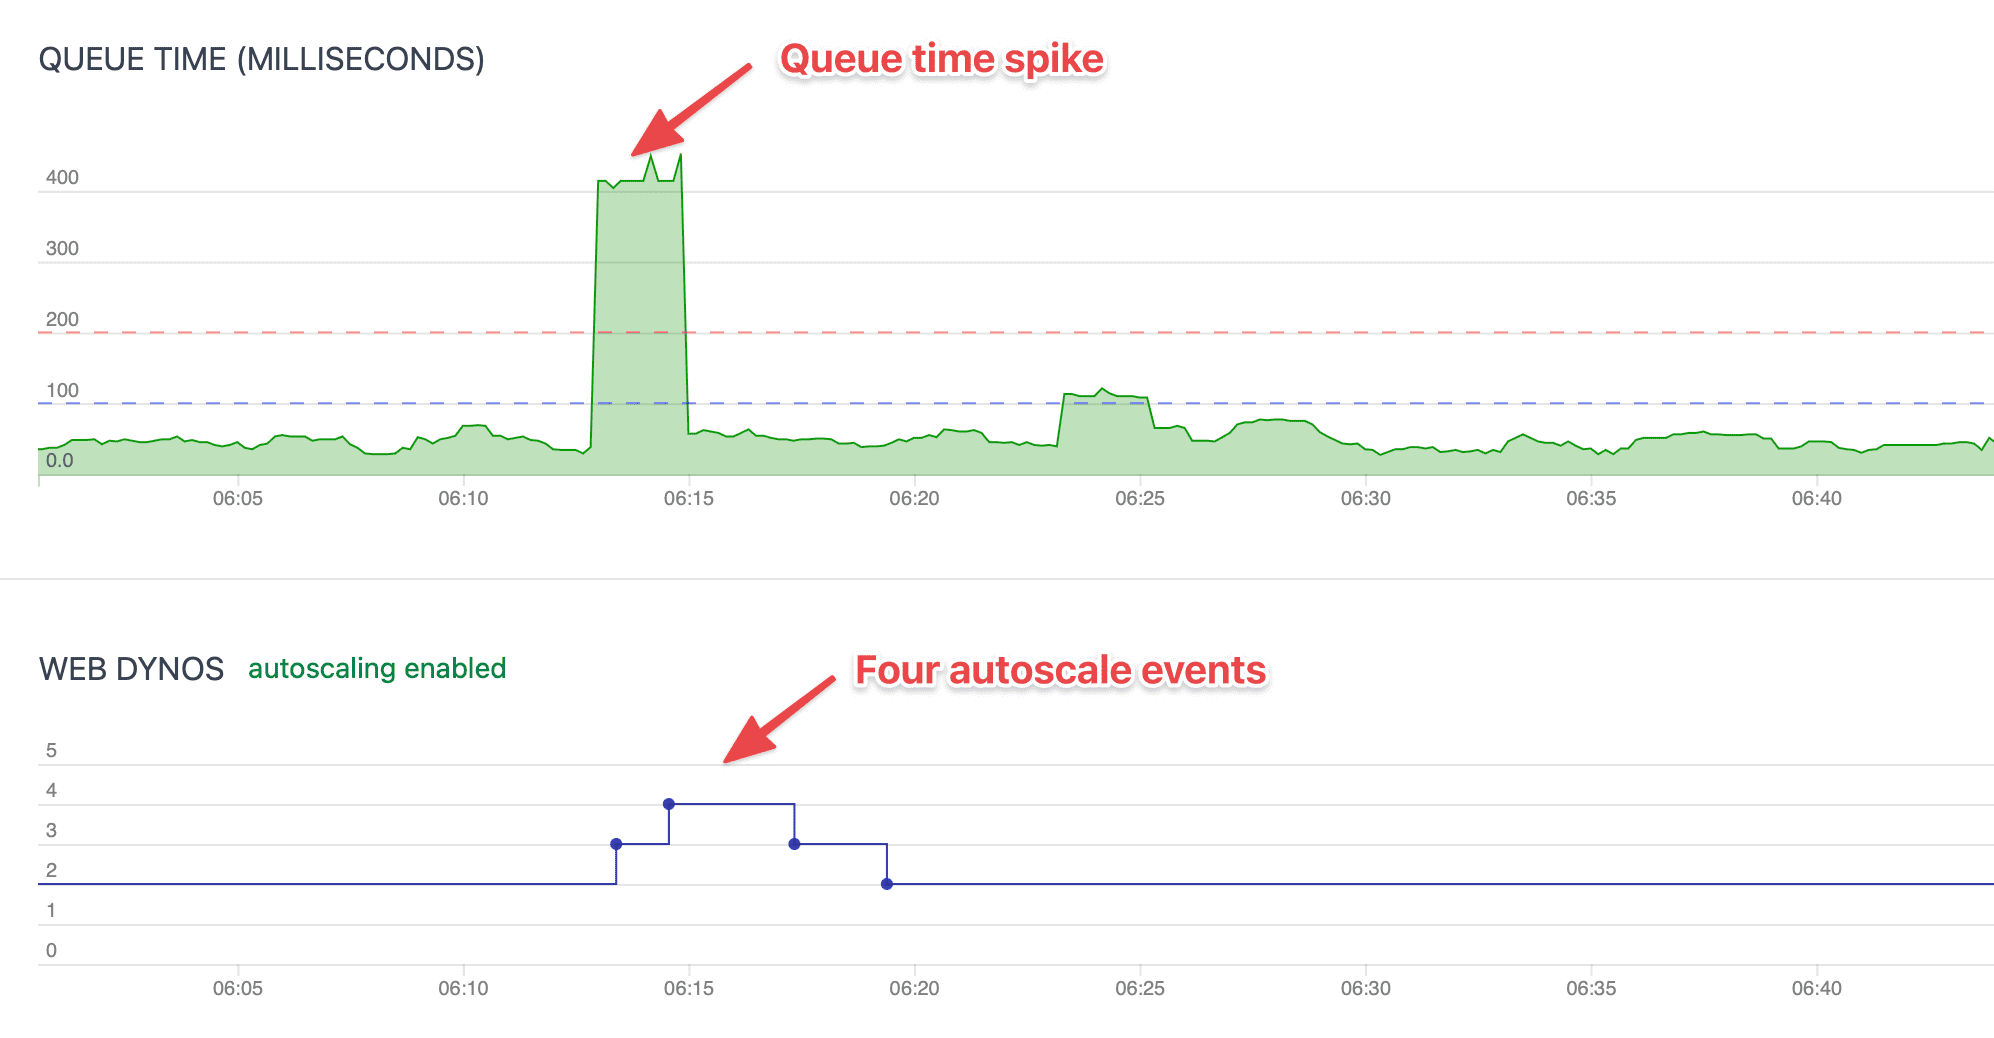 Rails Autoscale screenshot showing queue time spike